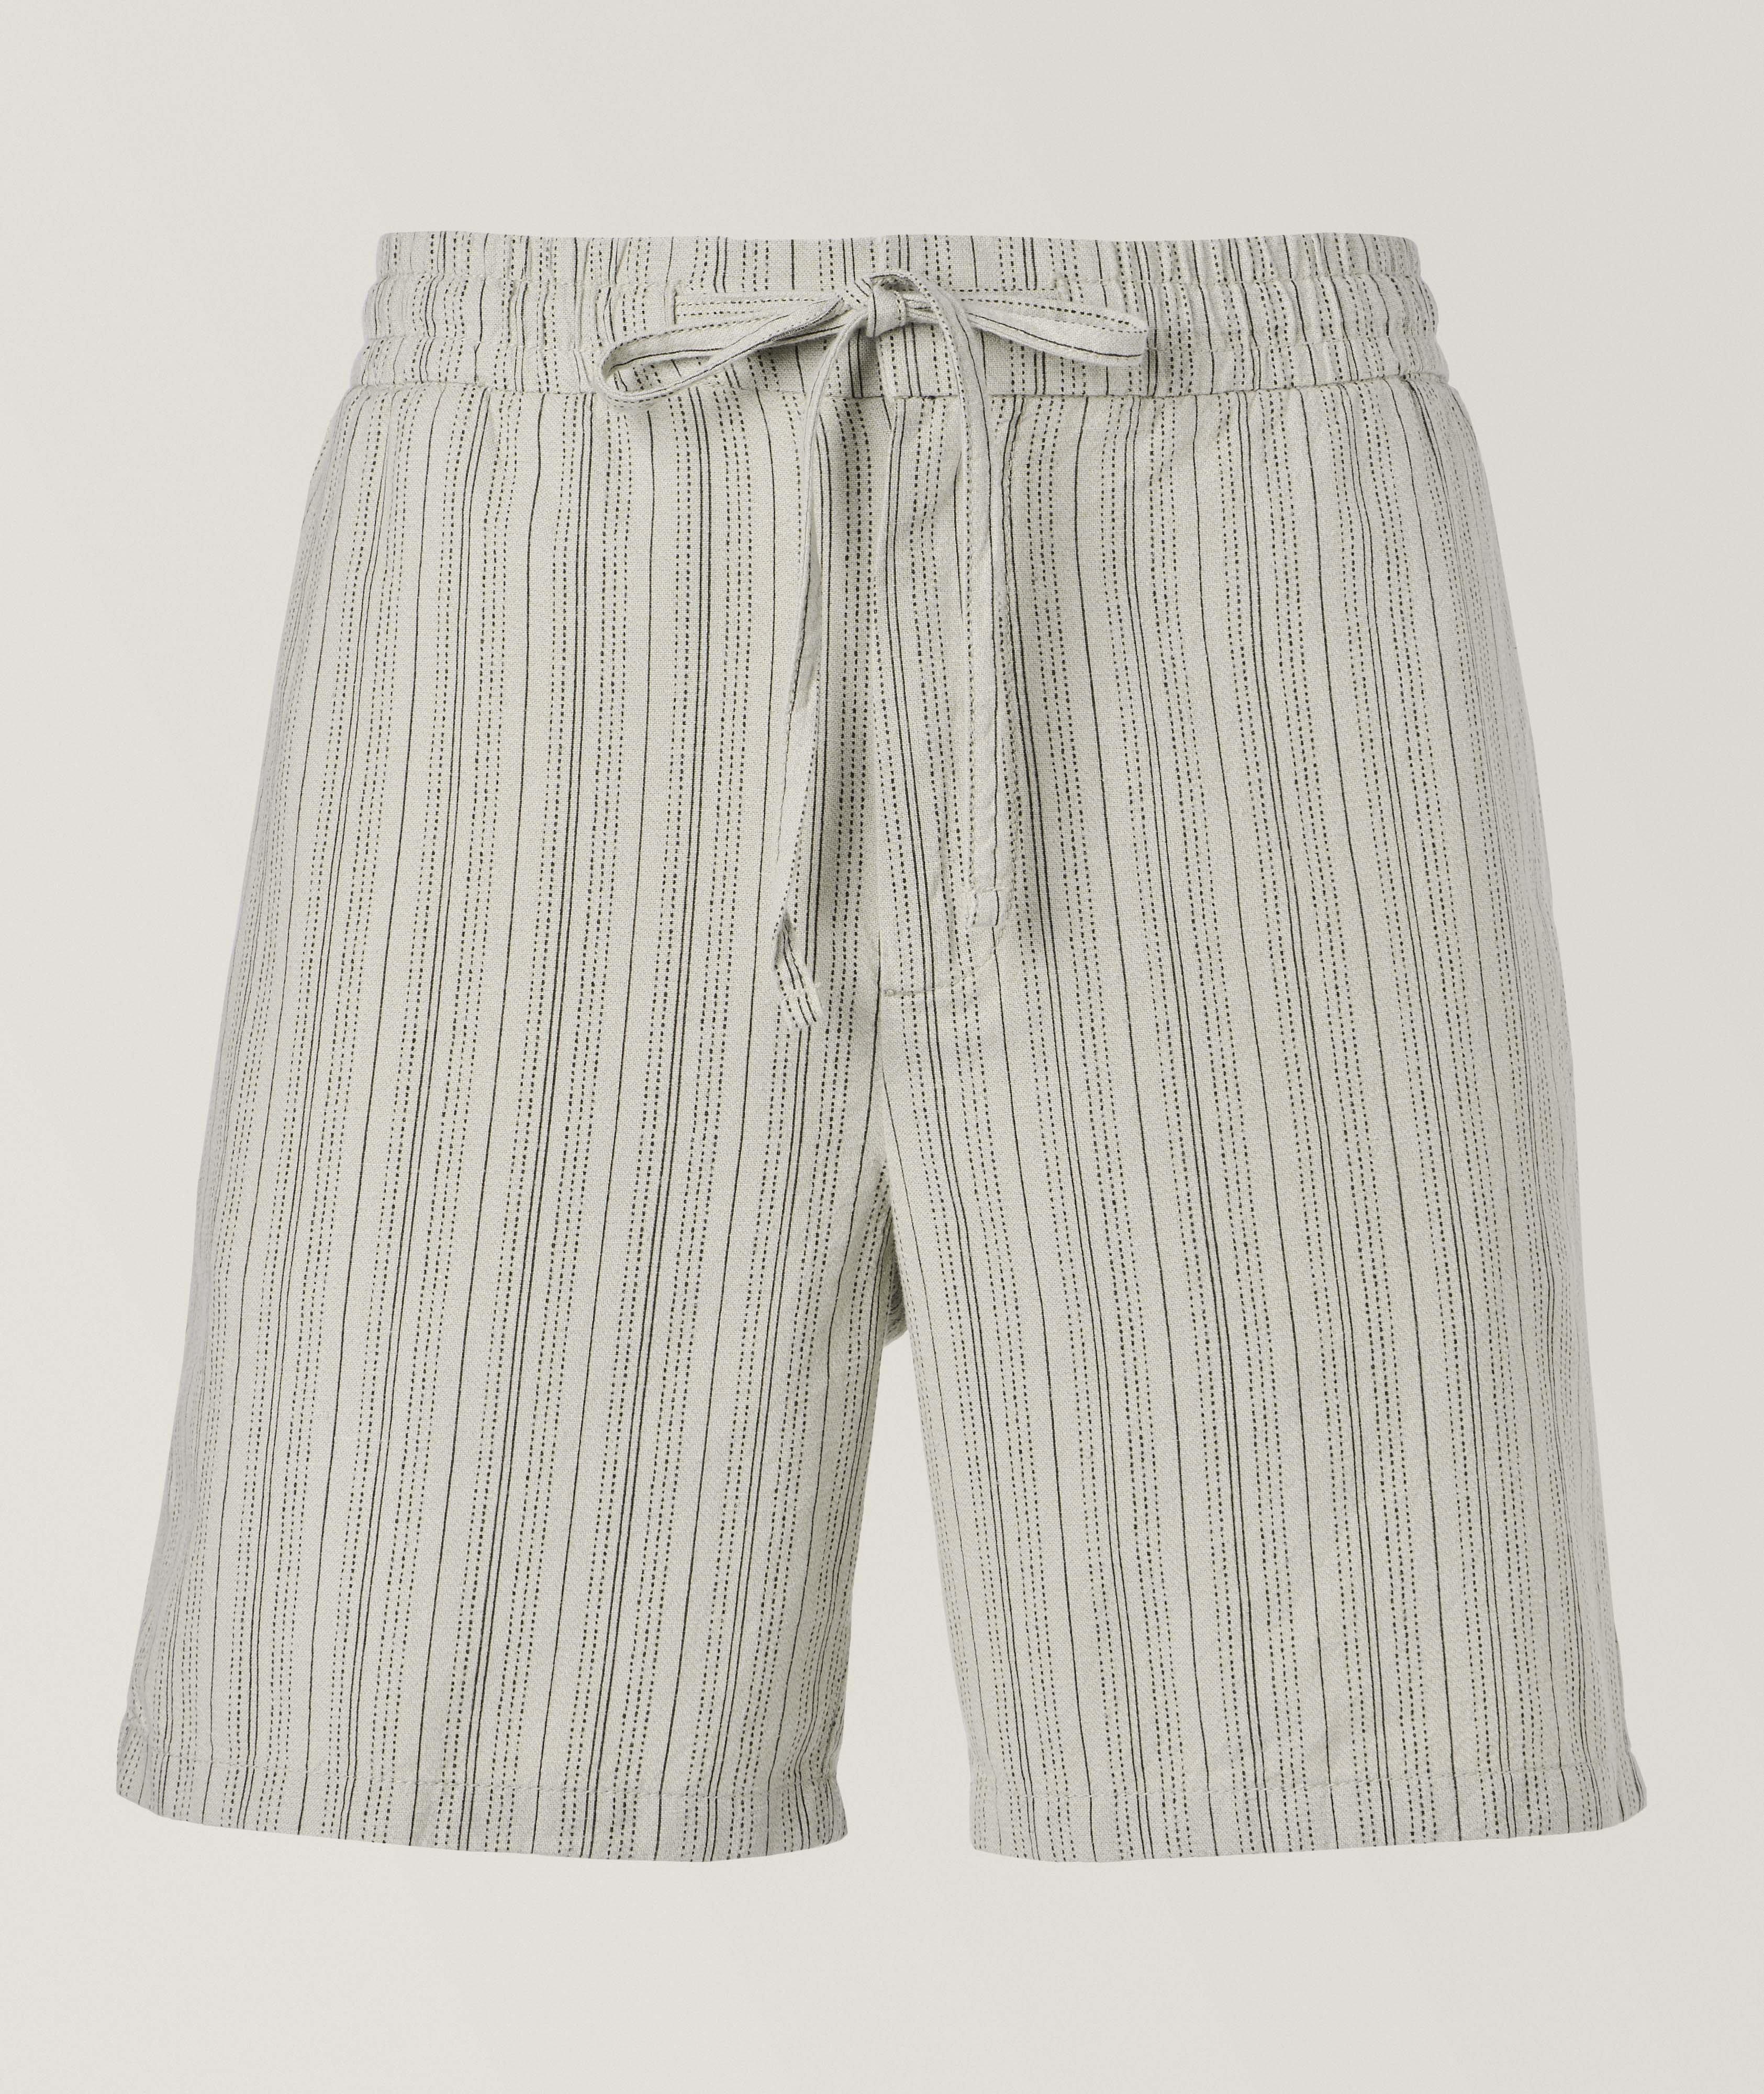 Striped Cotton-Blend Drawstring Shorts image 0